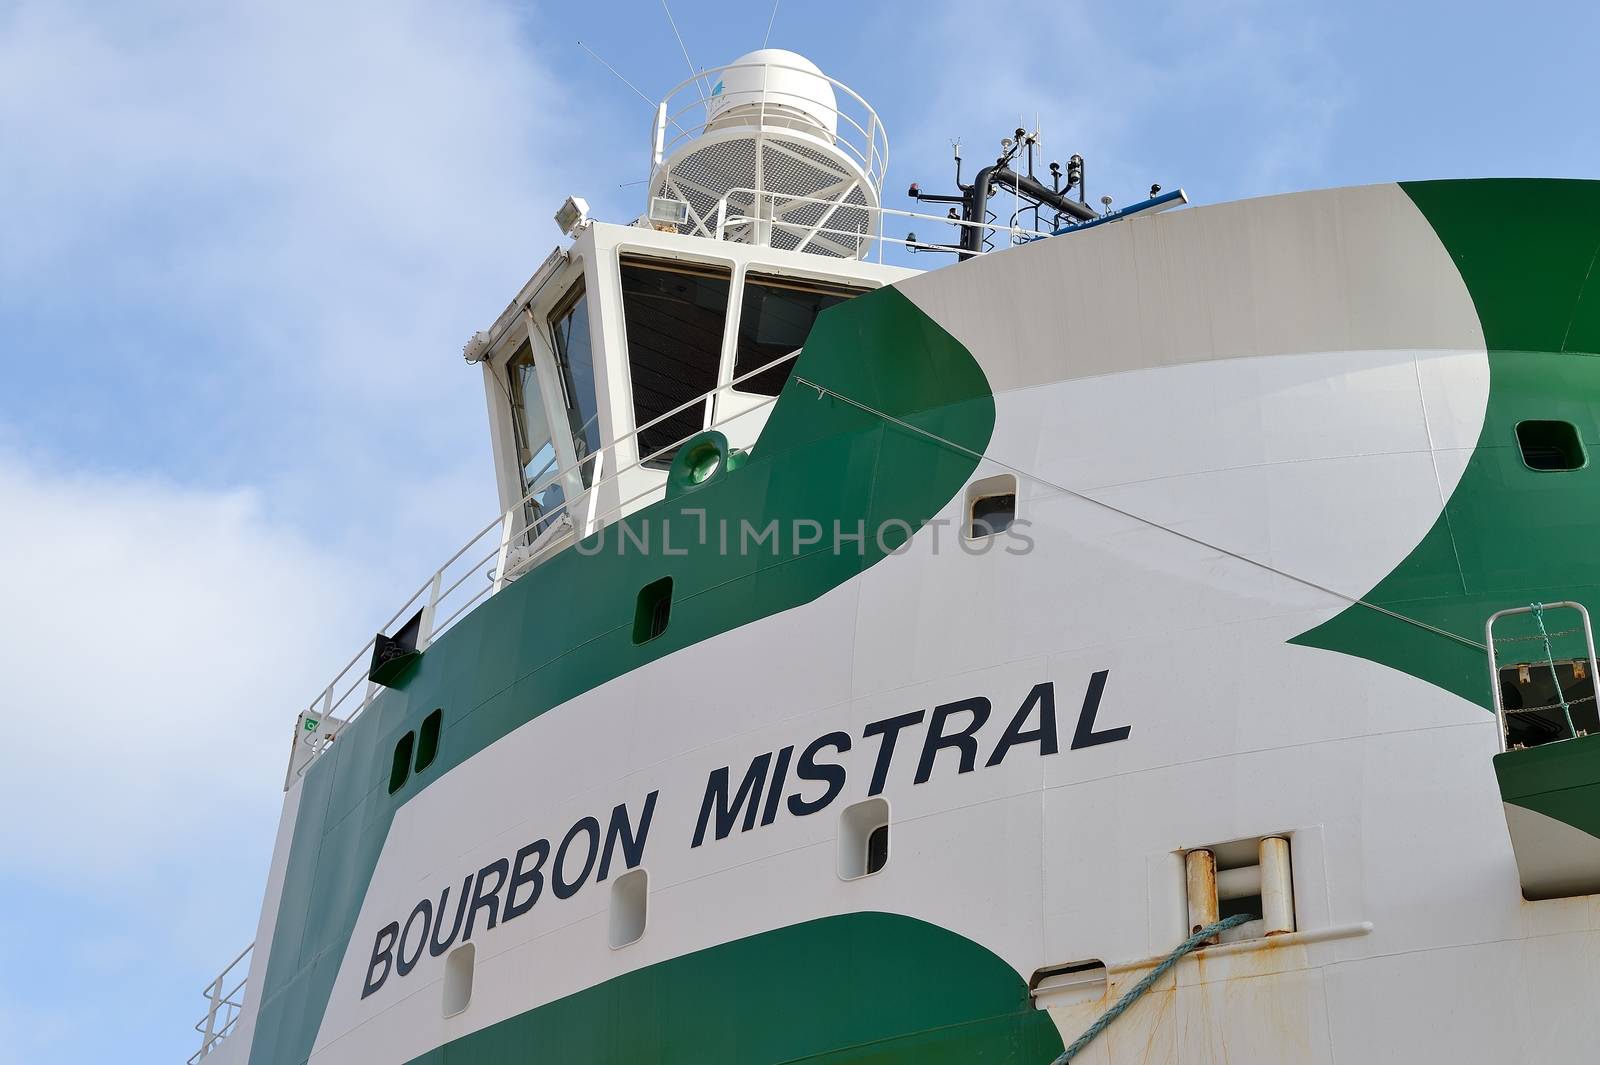 MV Bourbon Mistral Offshore North Sea Supply Vessel Moored in Stavanger Harbour